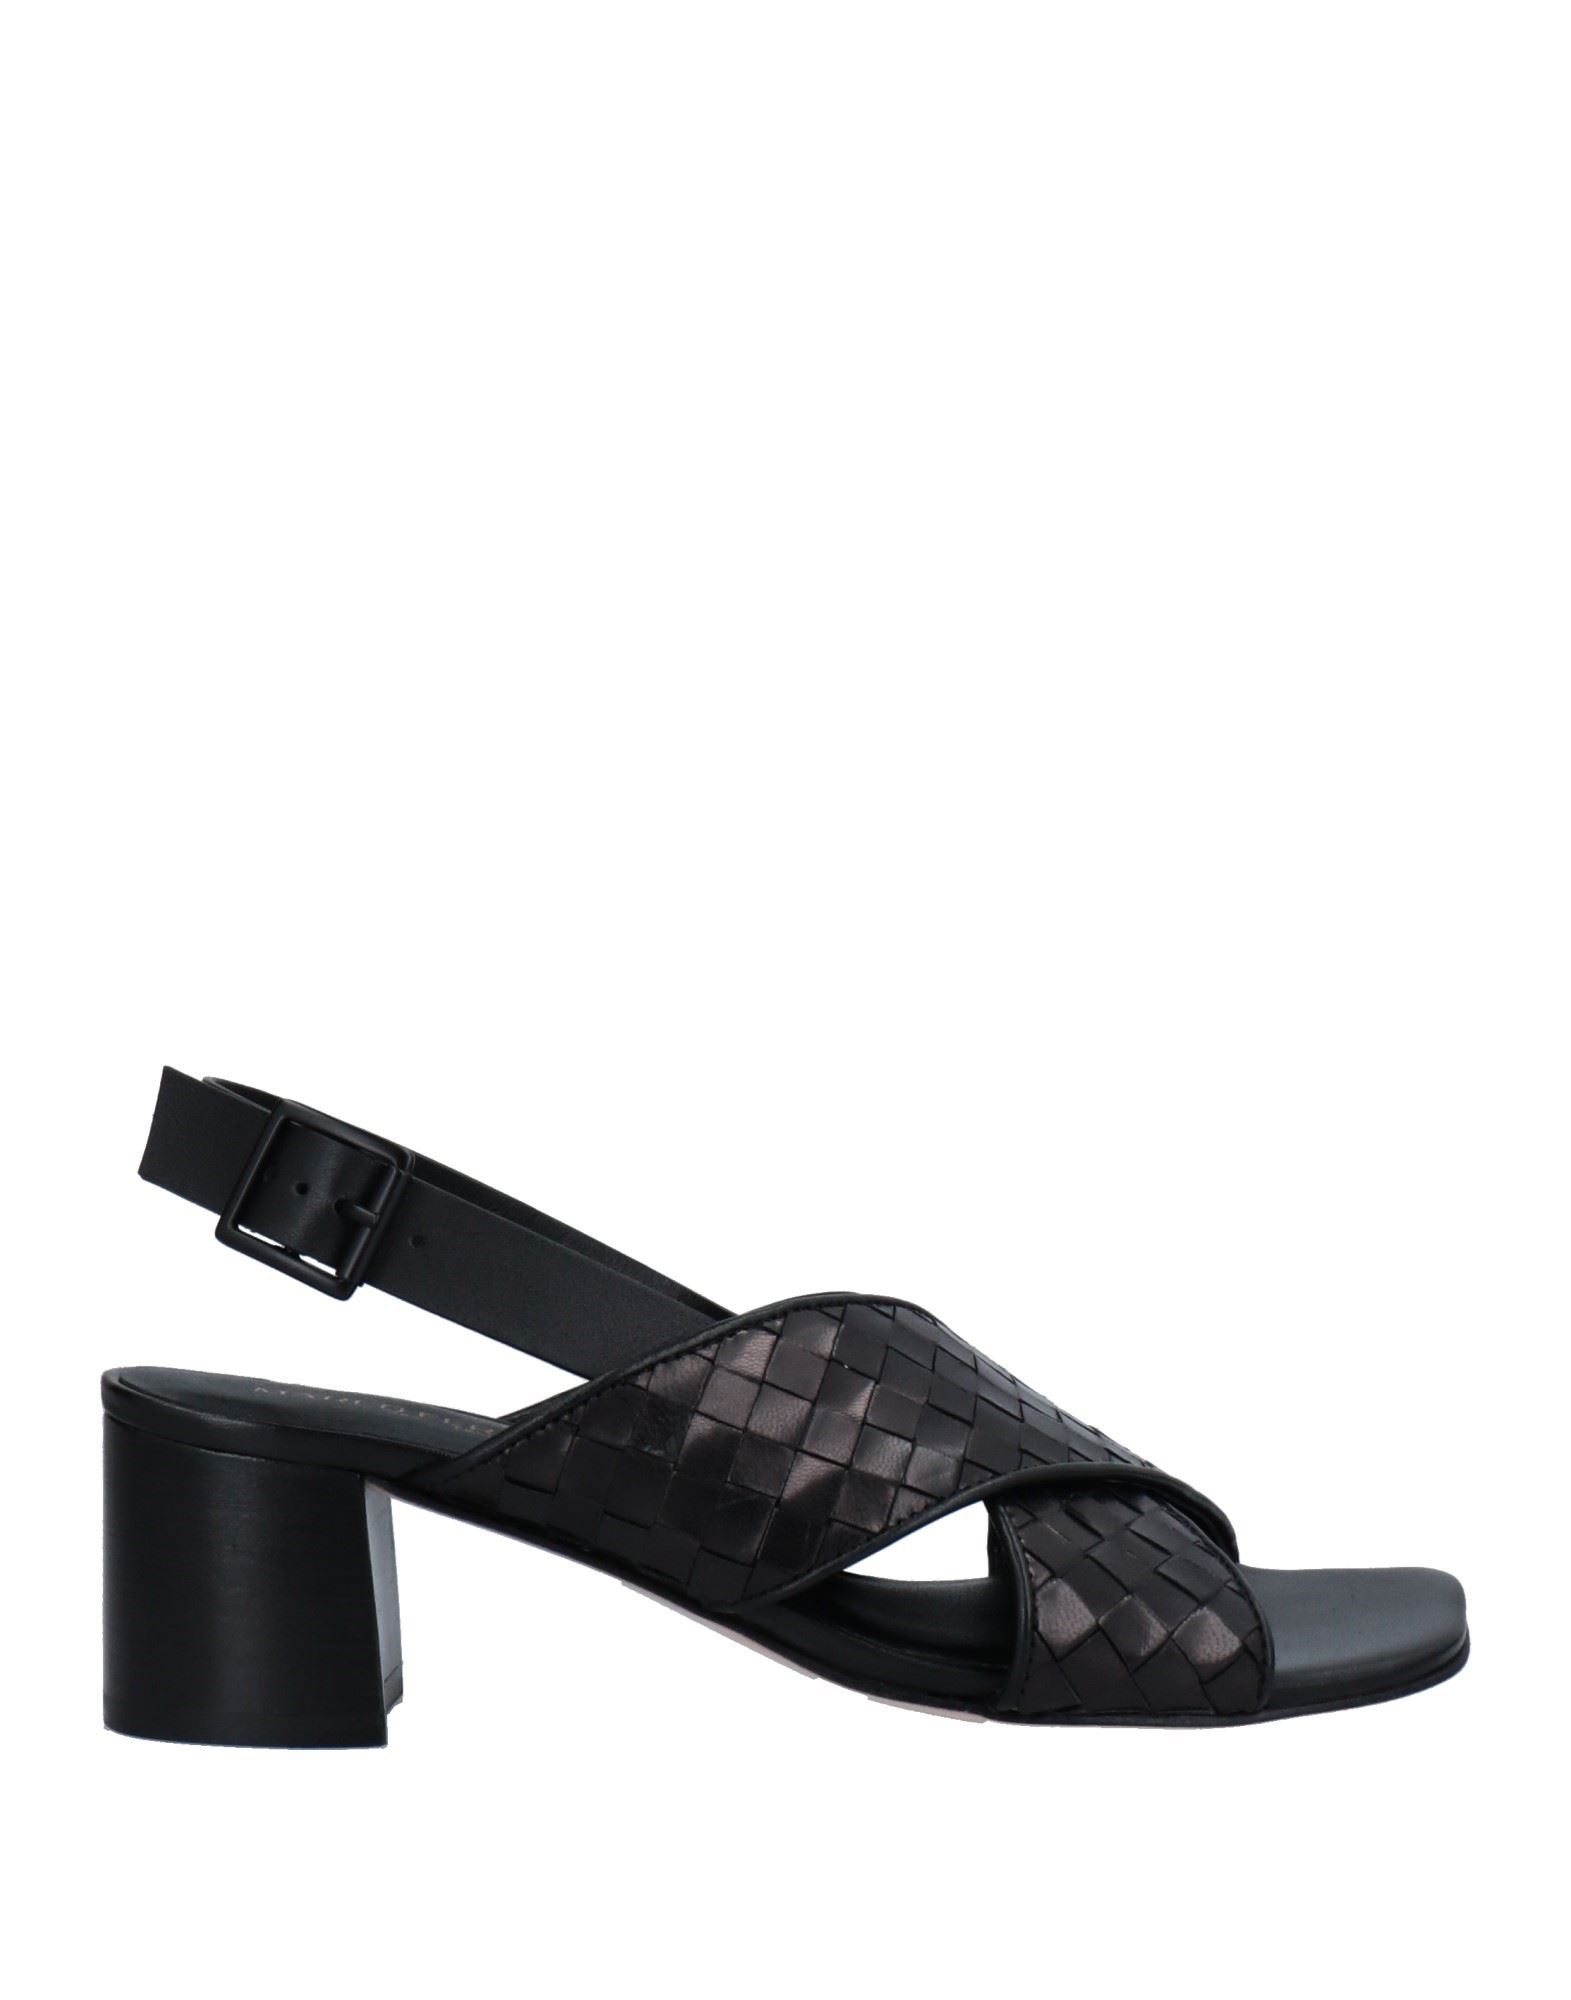 Marco Ferretti Sandals In Black